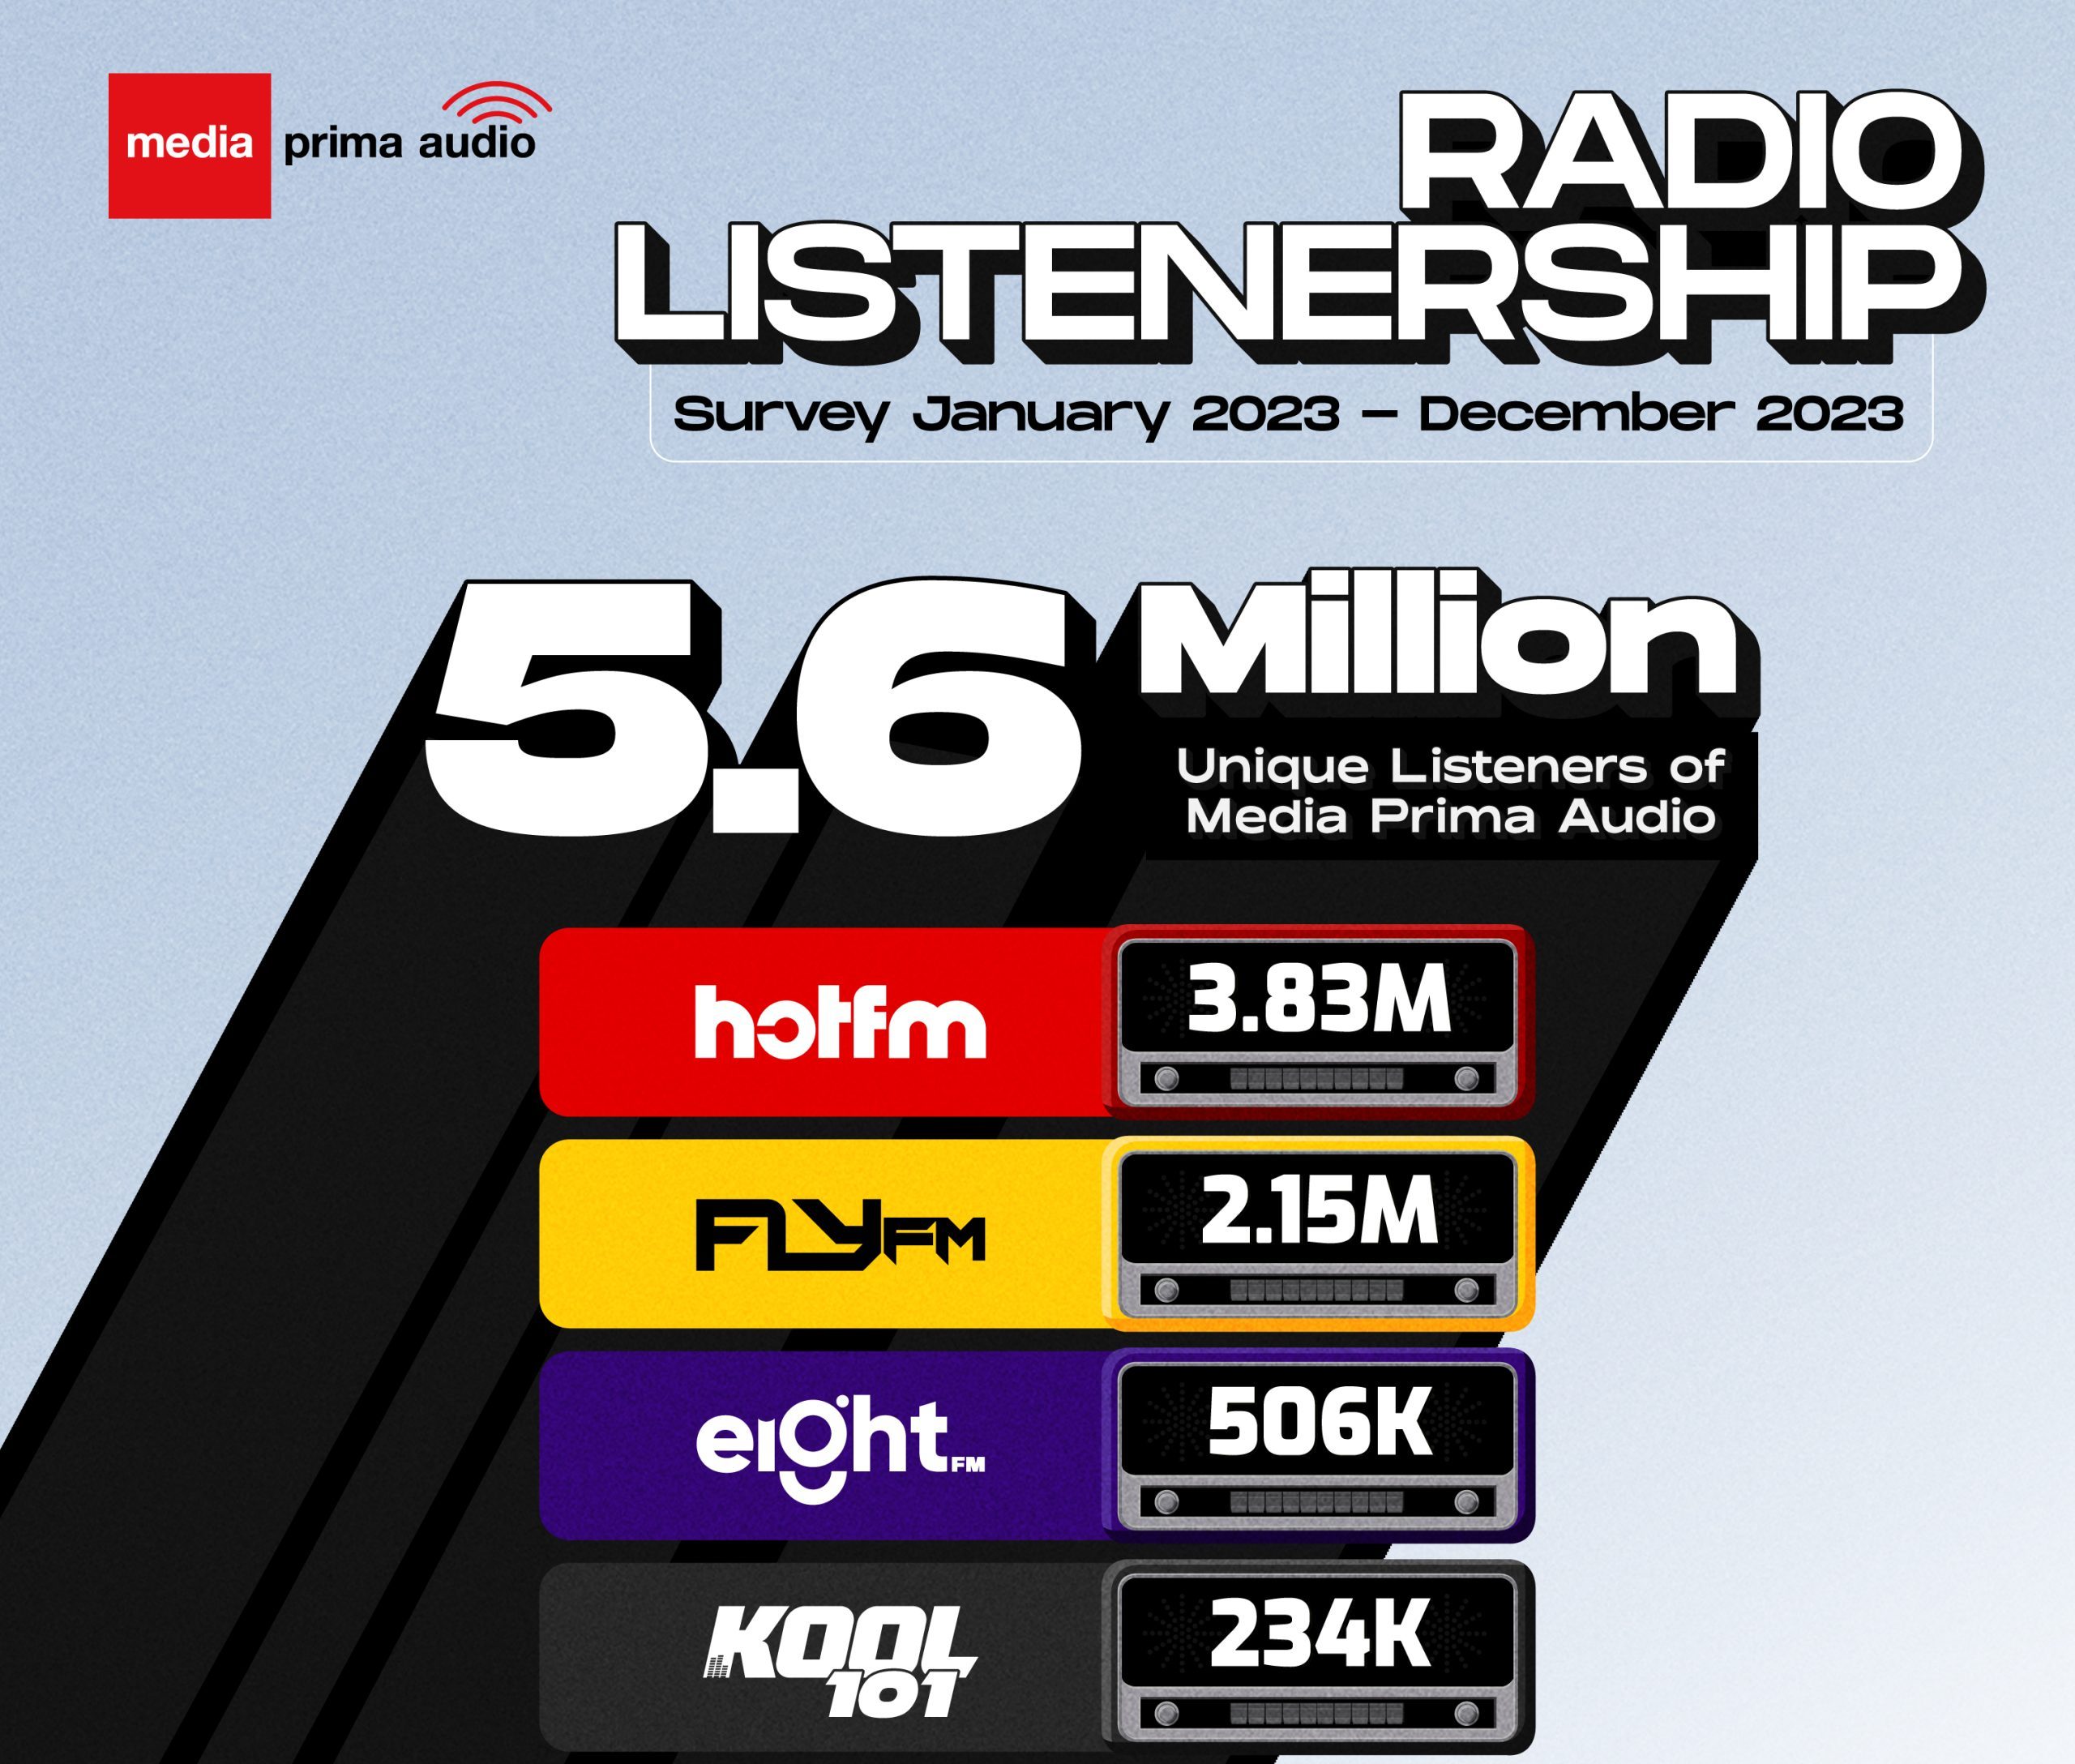 Hot FM 引领马来西亚广播电台，每周有近 400 万听众：尼尔森